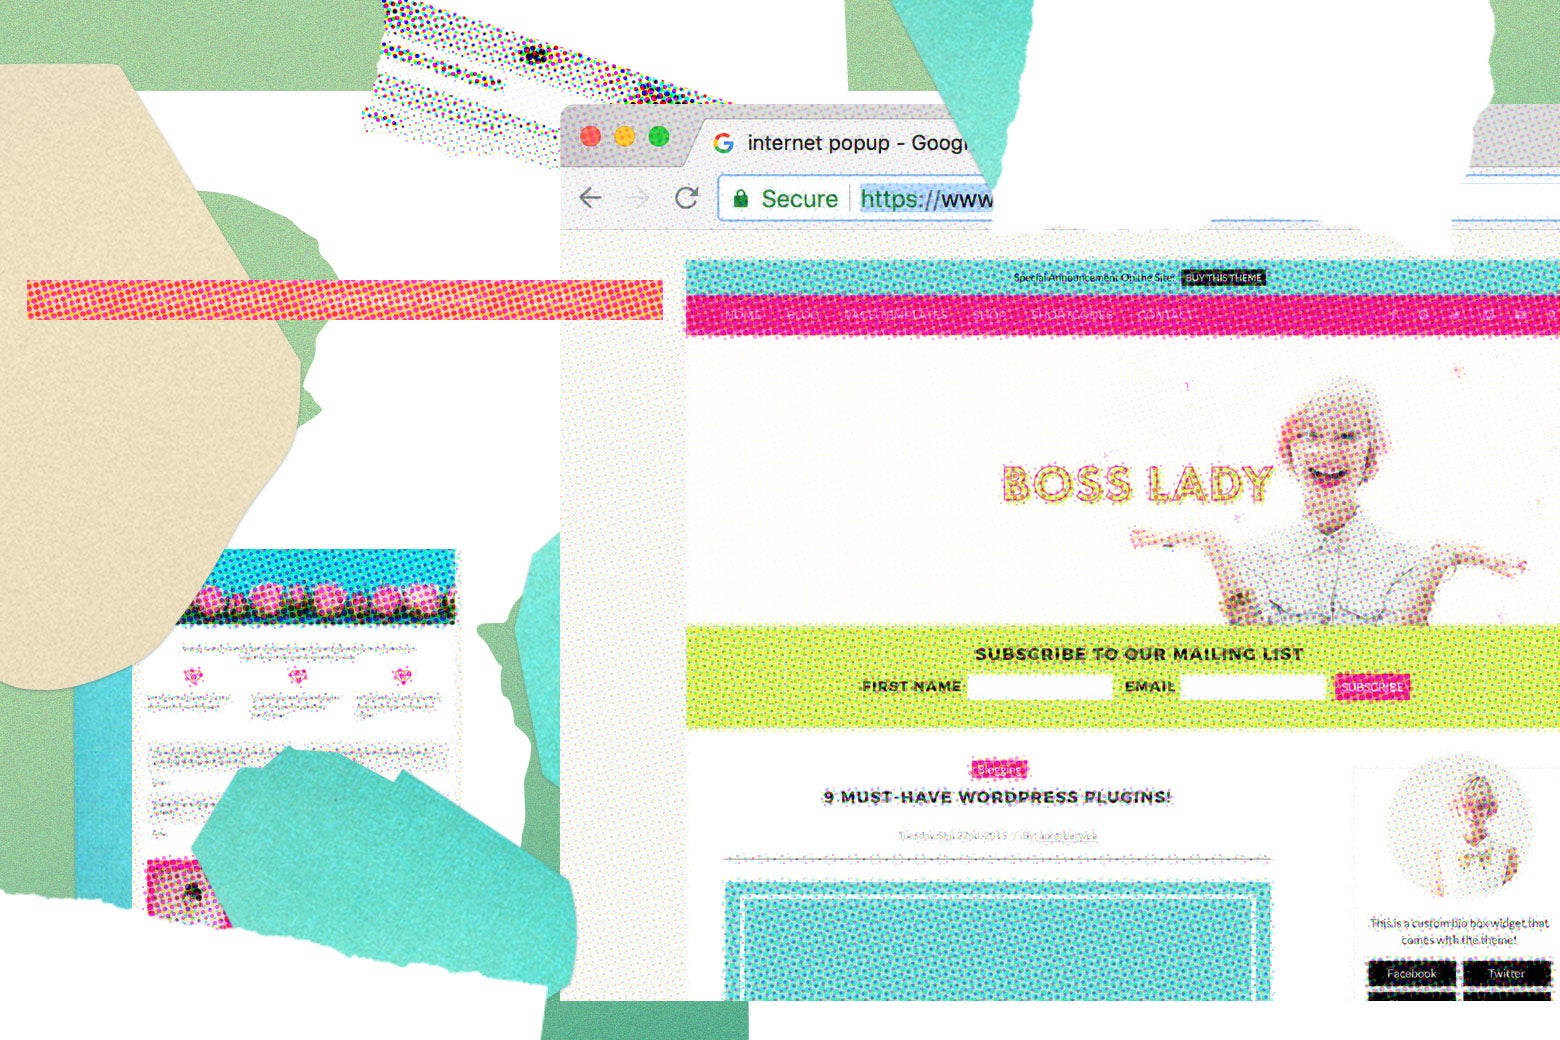 "Boss Lady" website design themes.